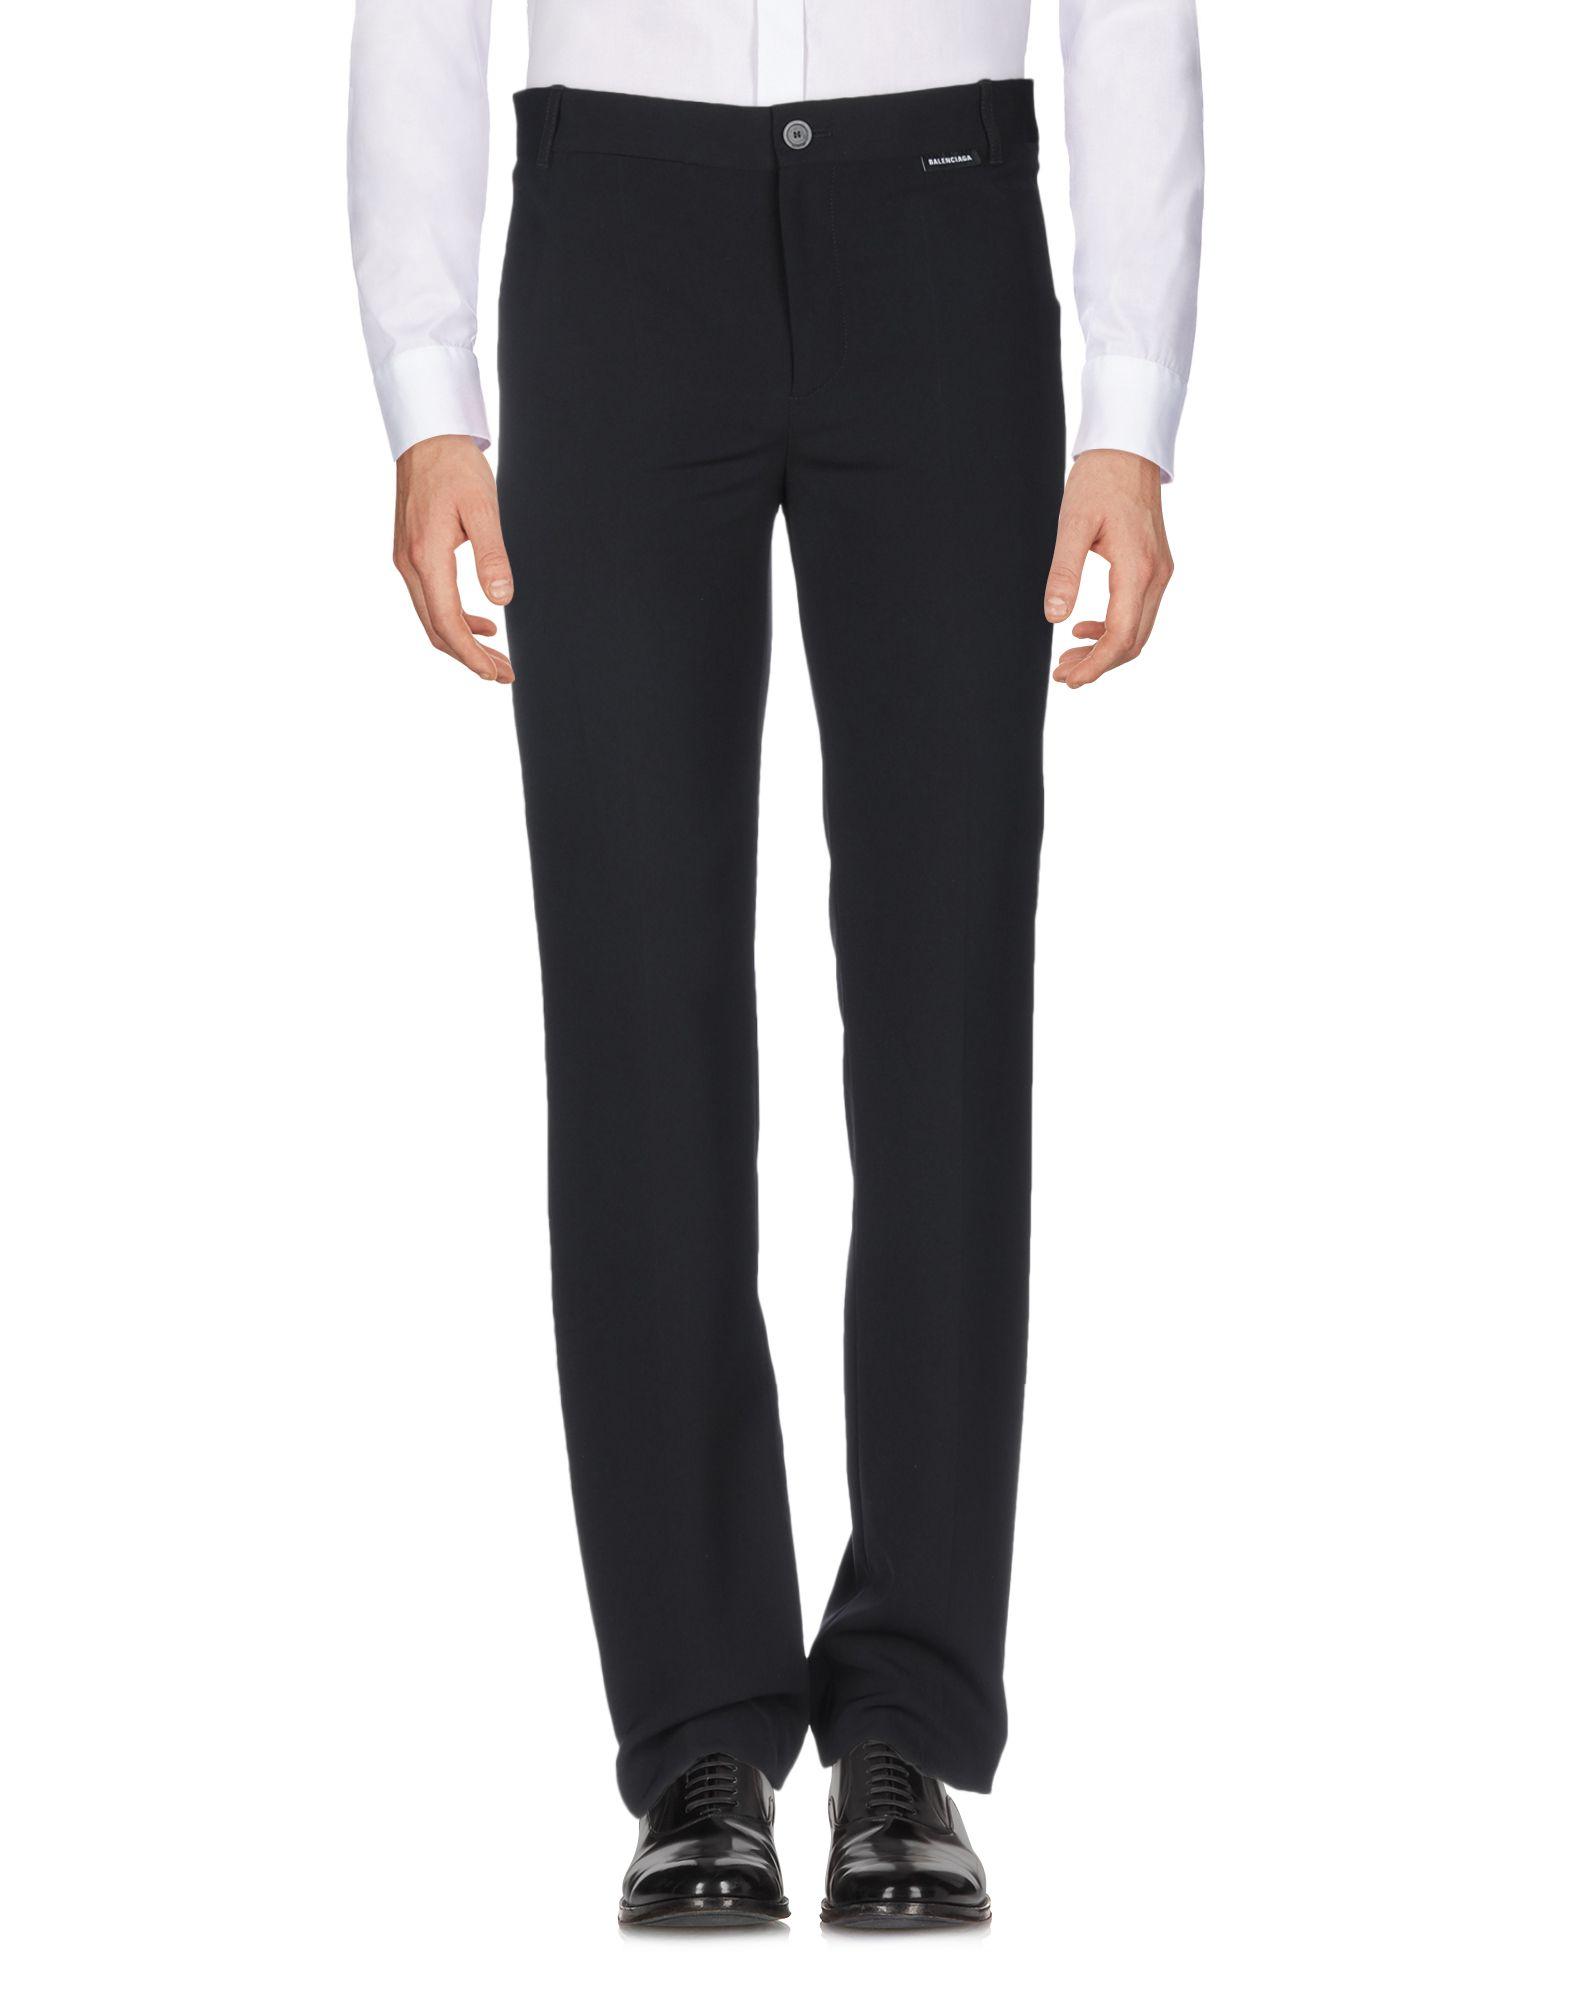 Balenciaga Cotton Casual Trouser in Black for Men - Lyst